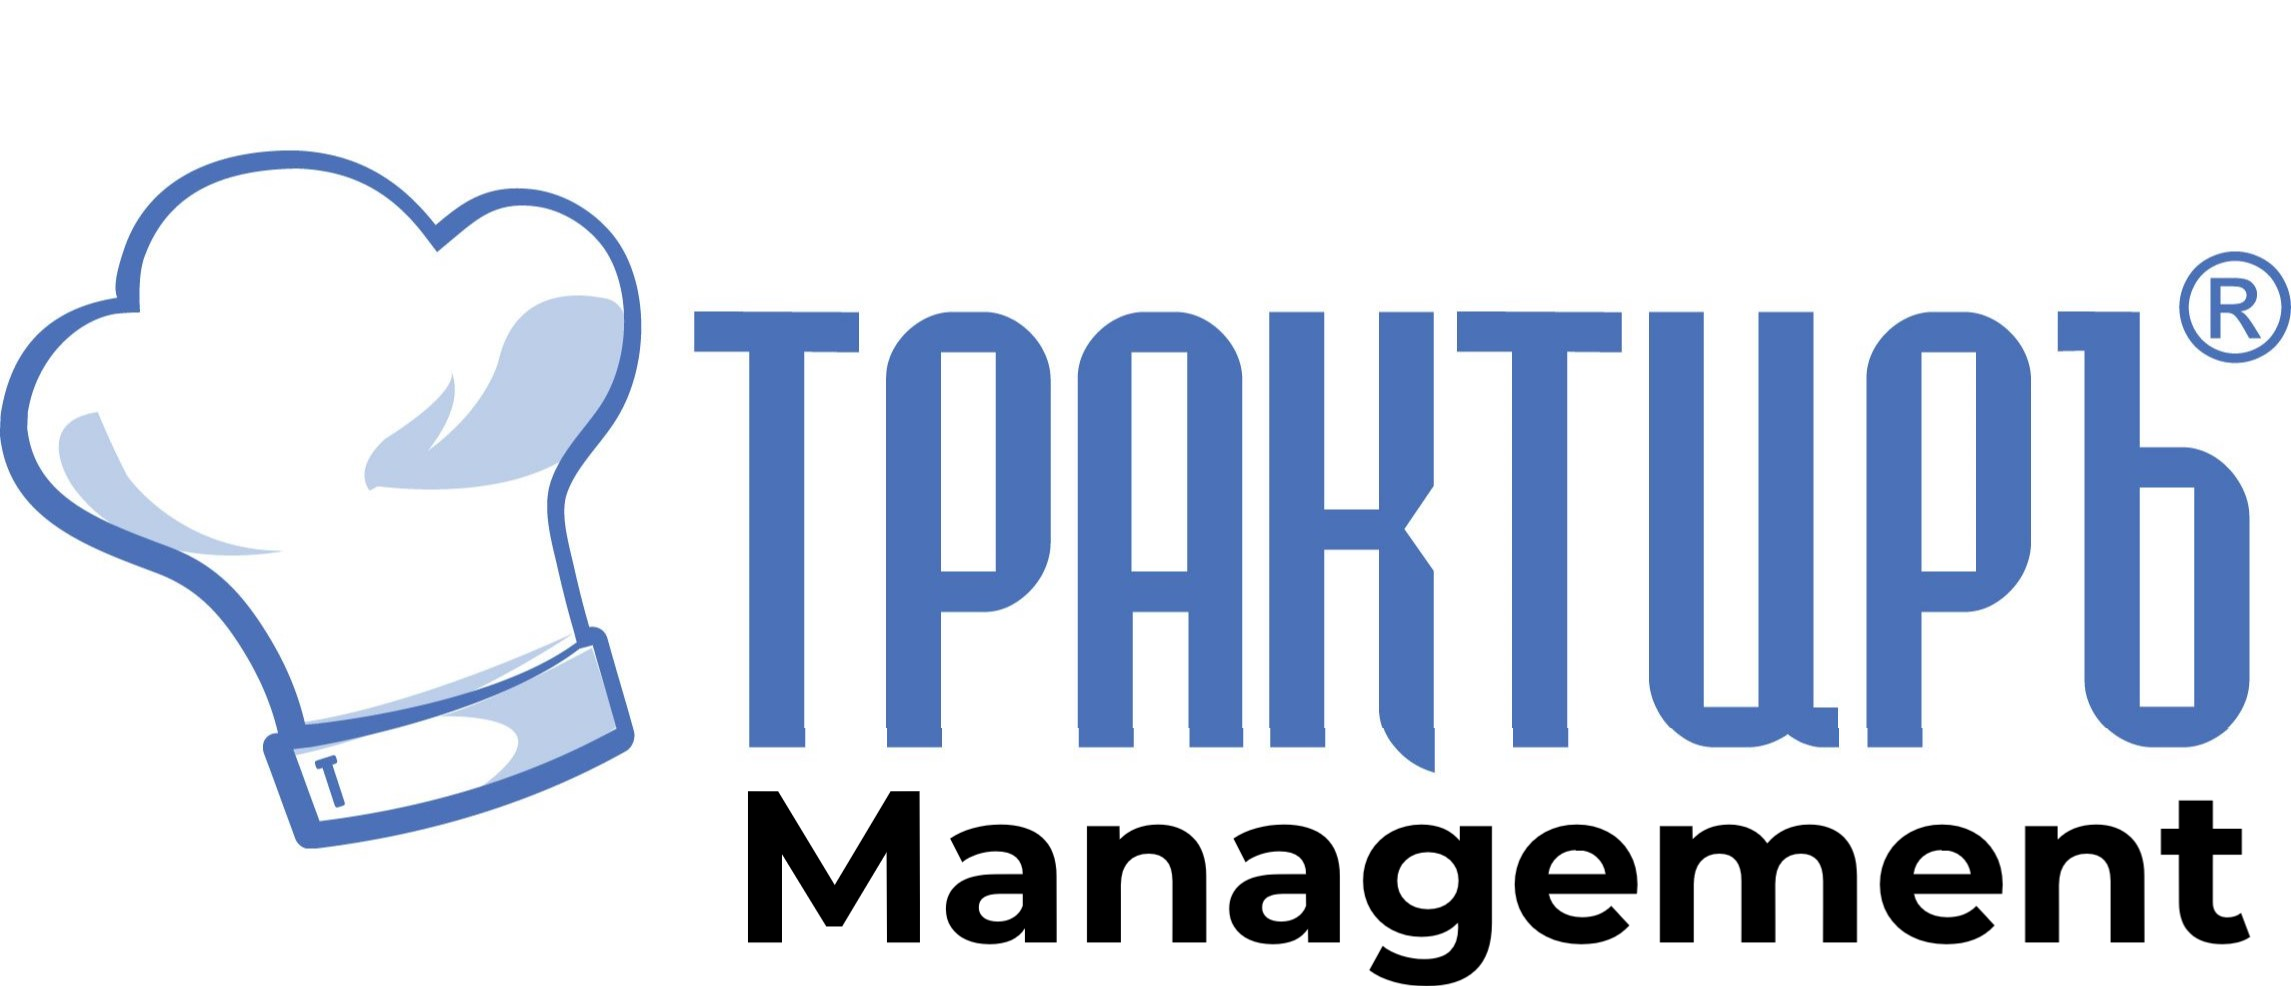 Трактиръ: Management в Казани